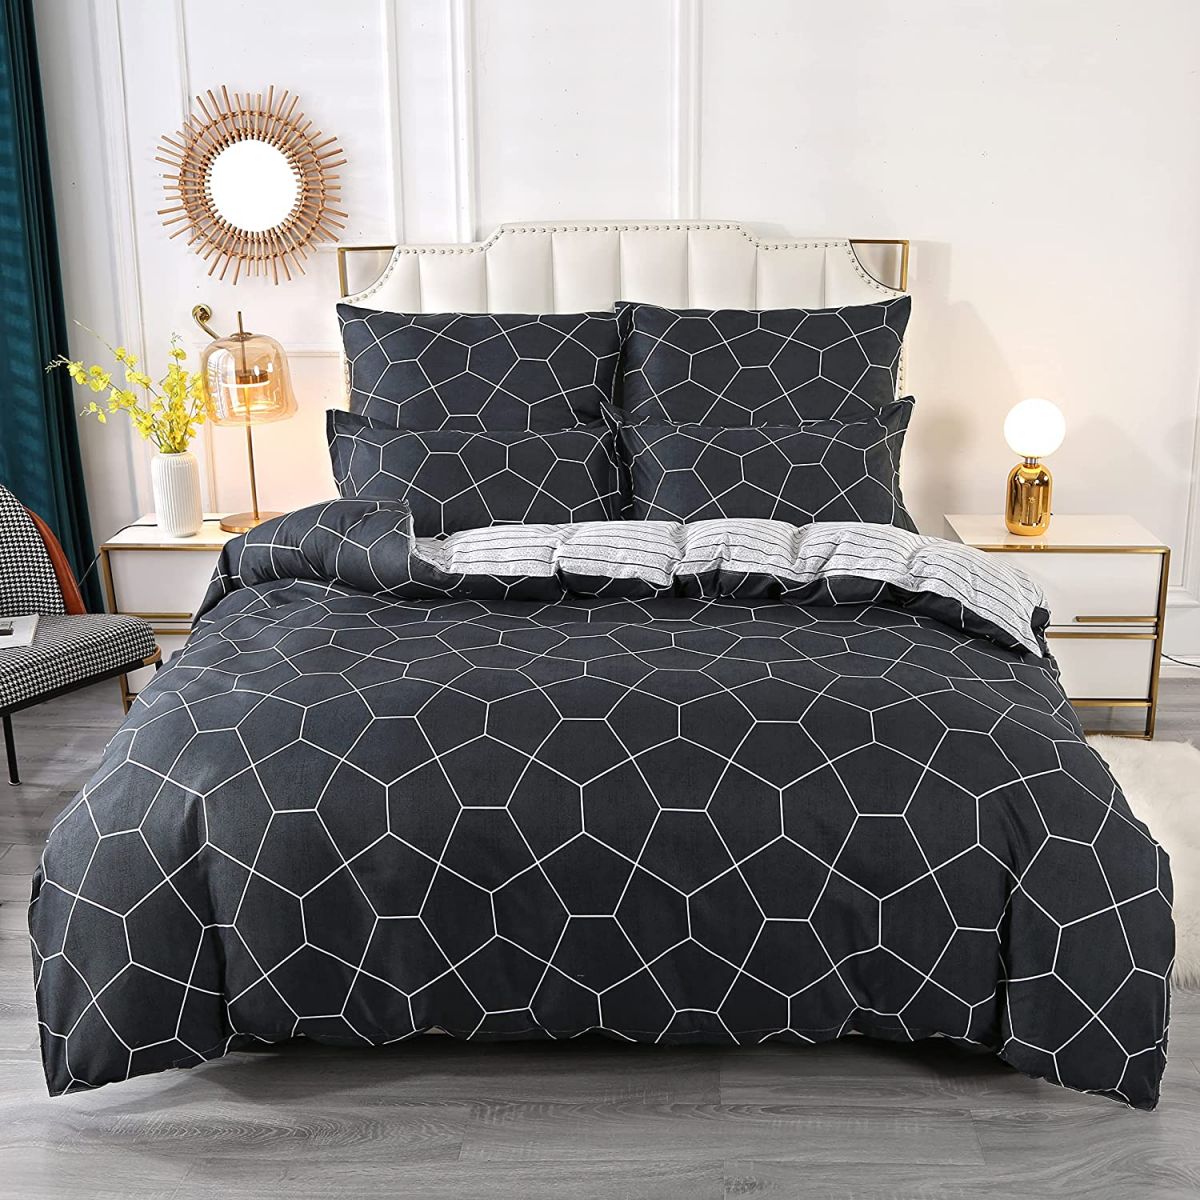 Homaxy Bed Linen 155 x 220 cm